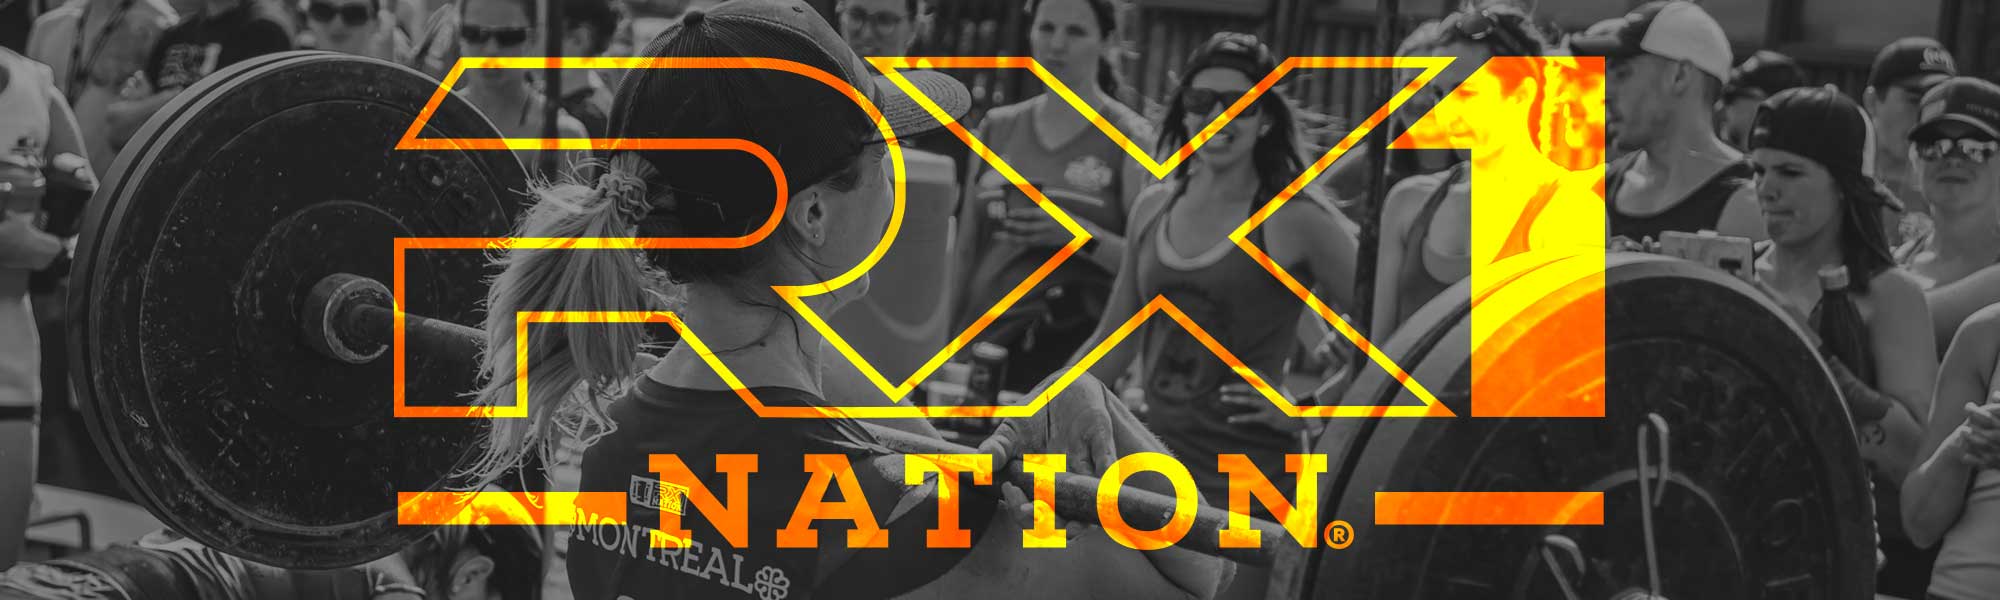 RX-1 Nation